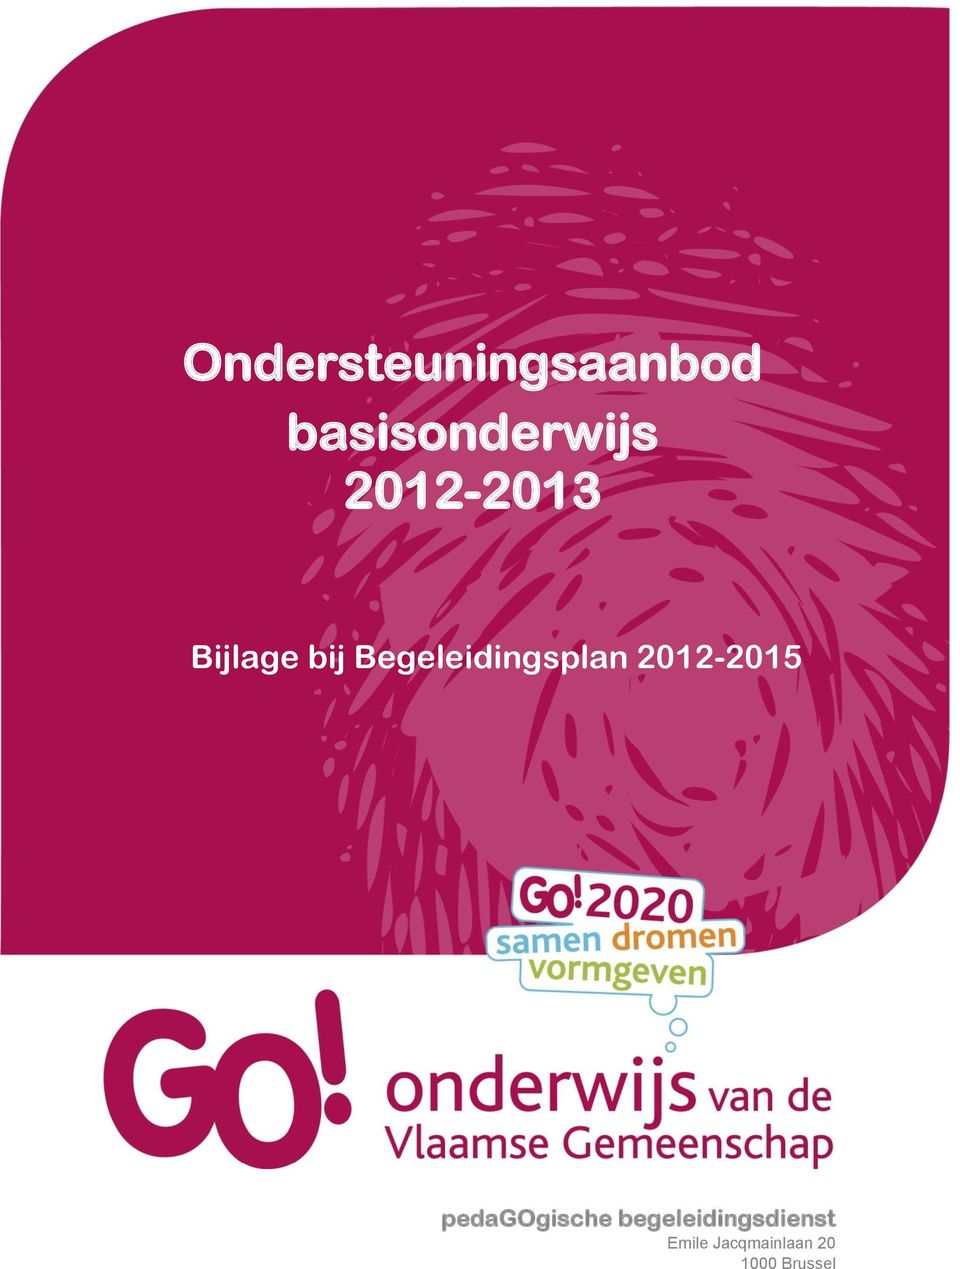 Begeleidingsplan 2012-2015